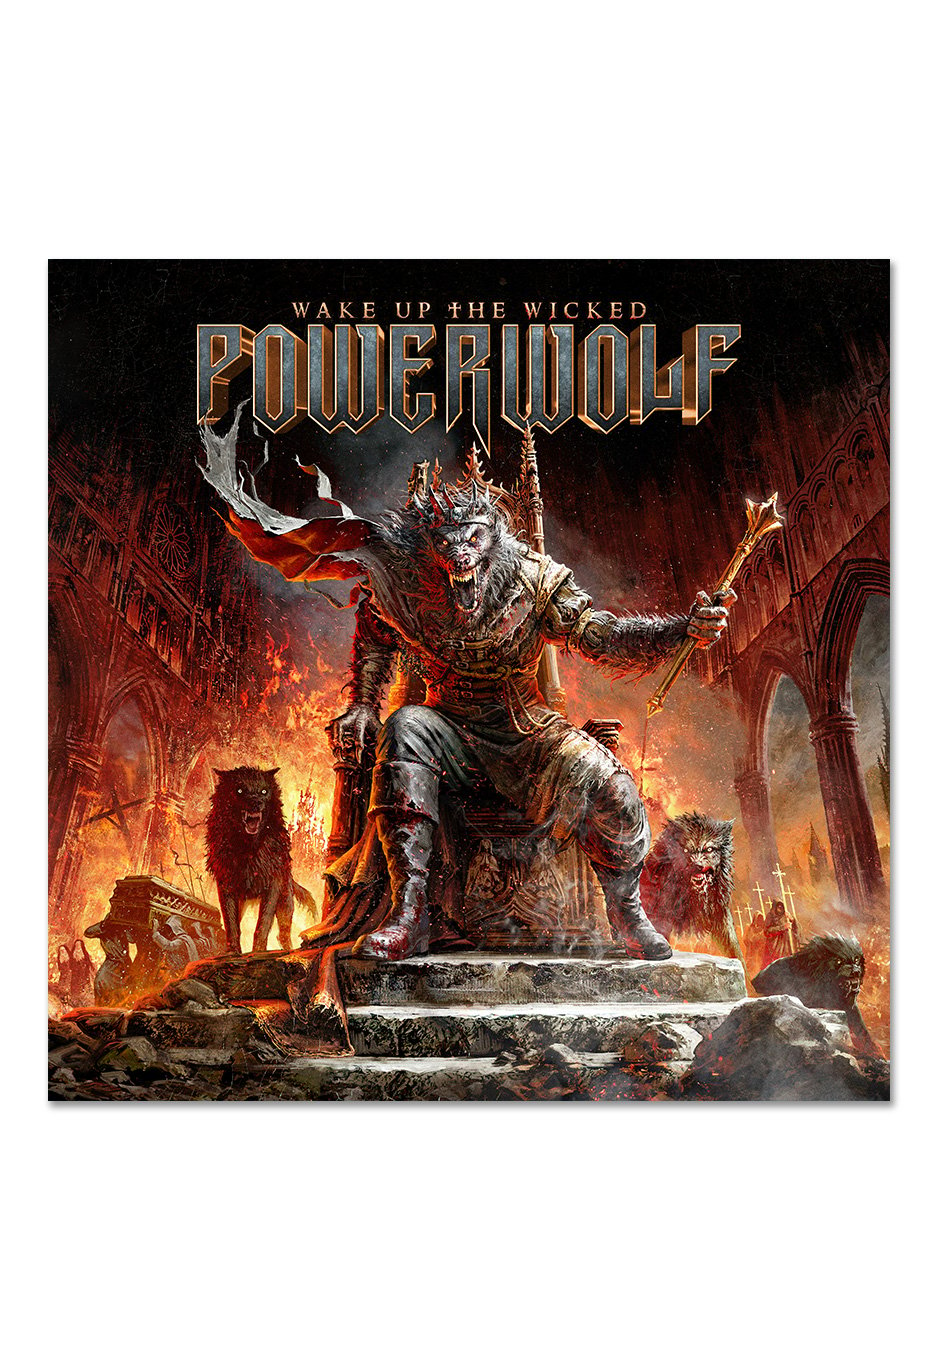 Powerwolf - Wake Up The Wicked Ltd. - Mediabook 2 CD